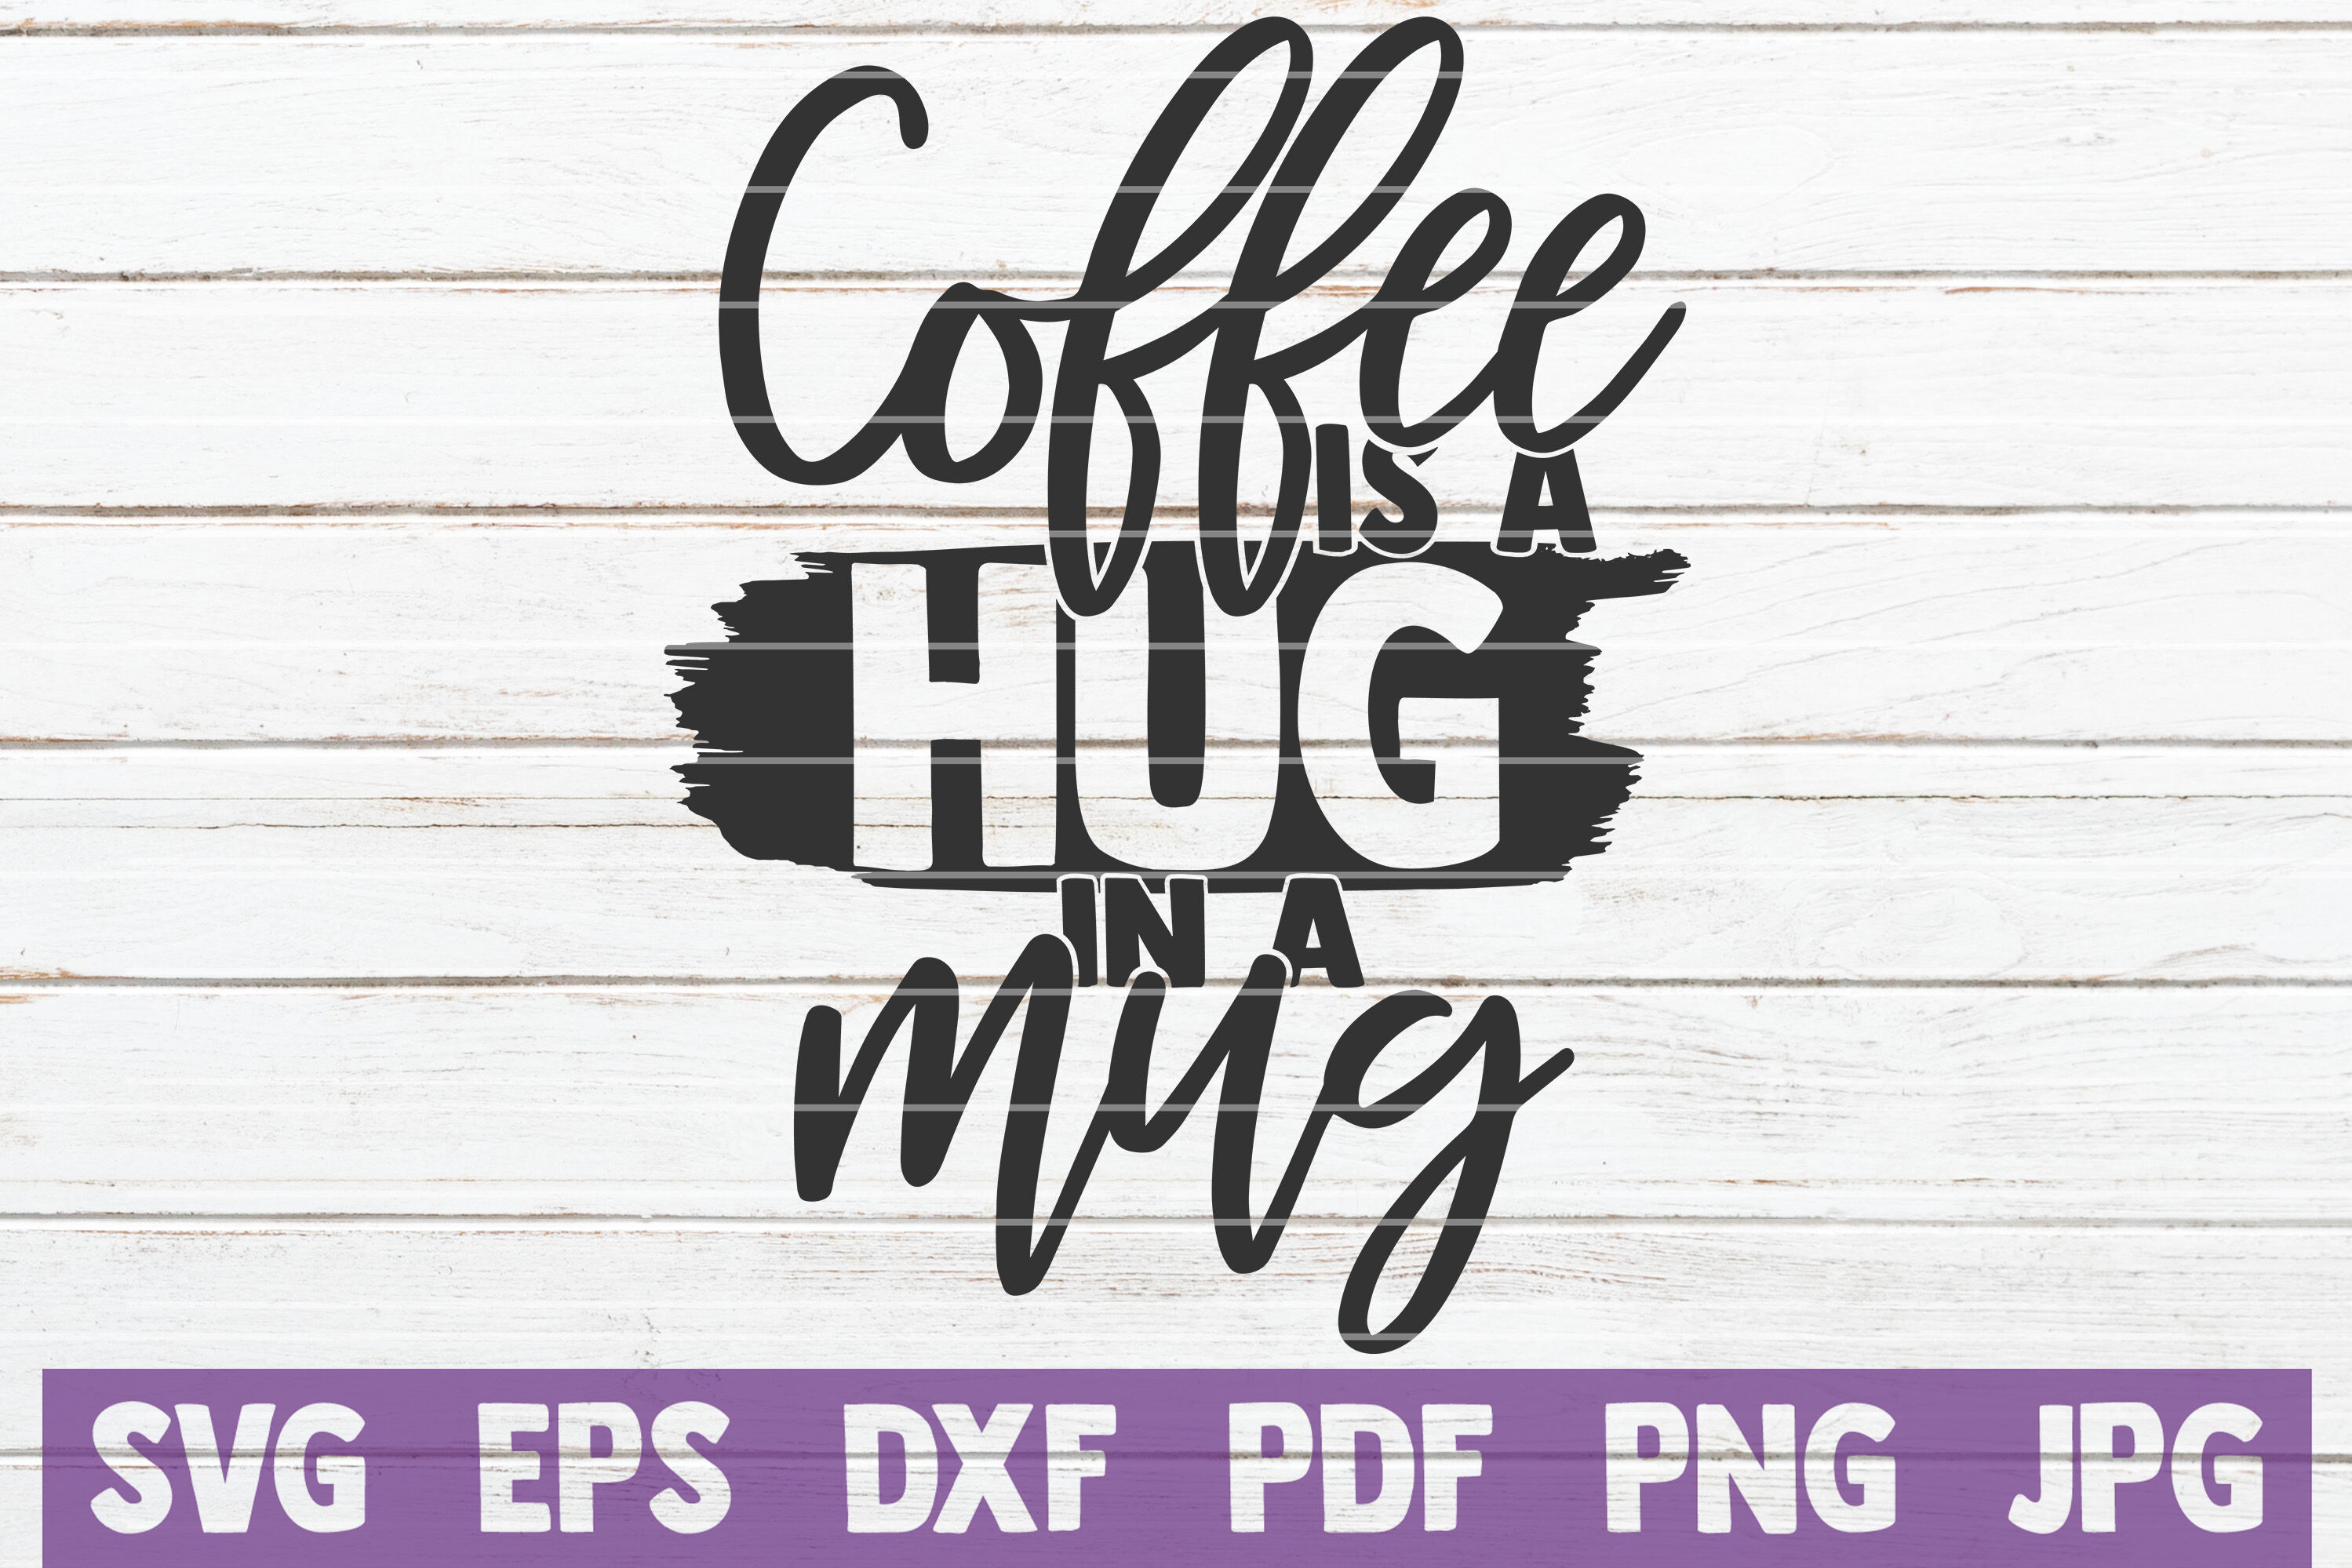 Free Free Coffee Svg Bundle 514 SVG PNG EPS DXF File